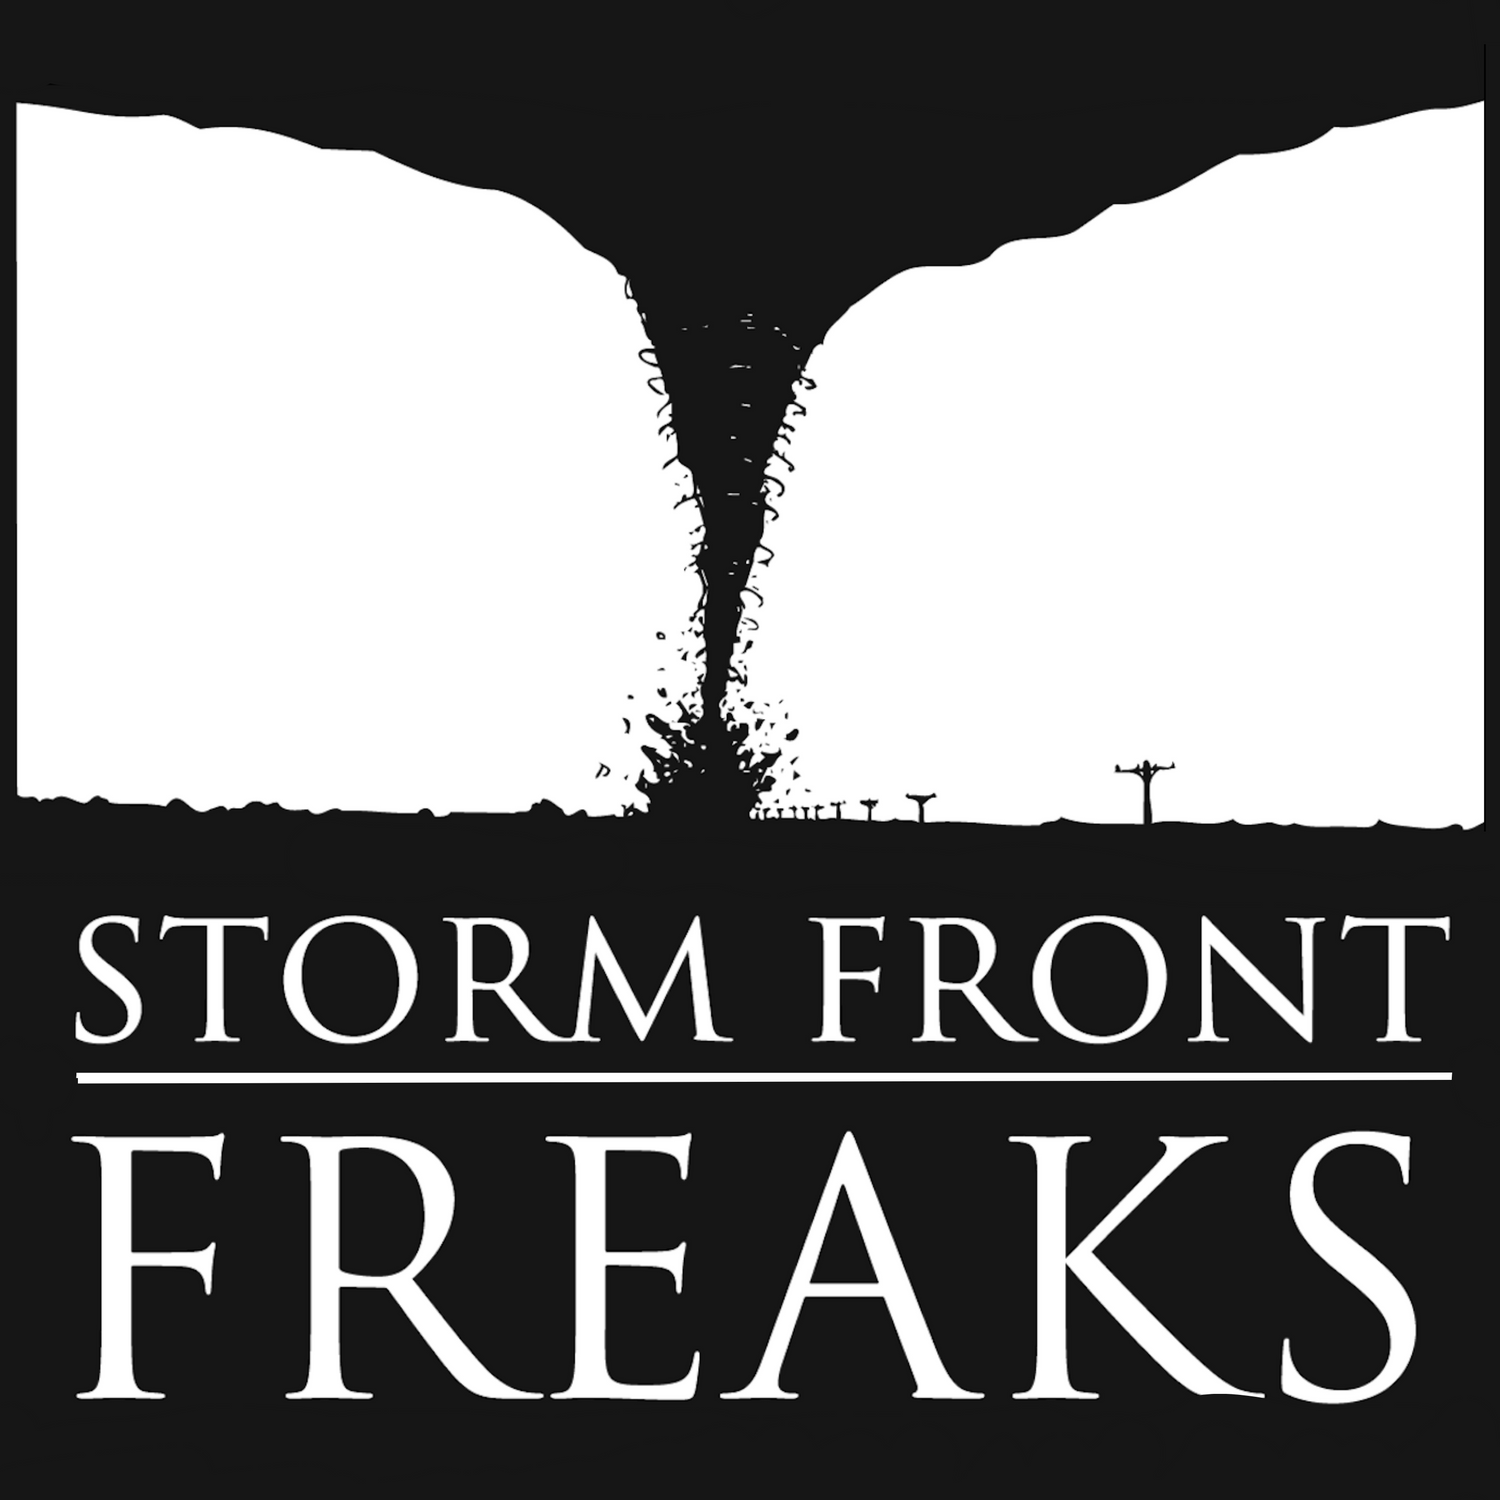 Storm Front Freaks